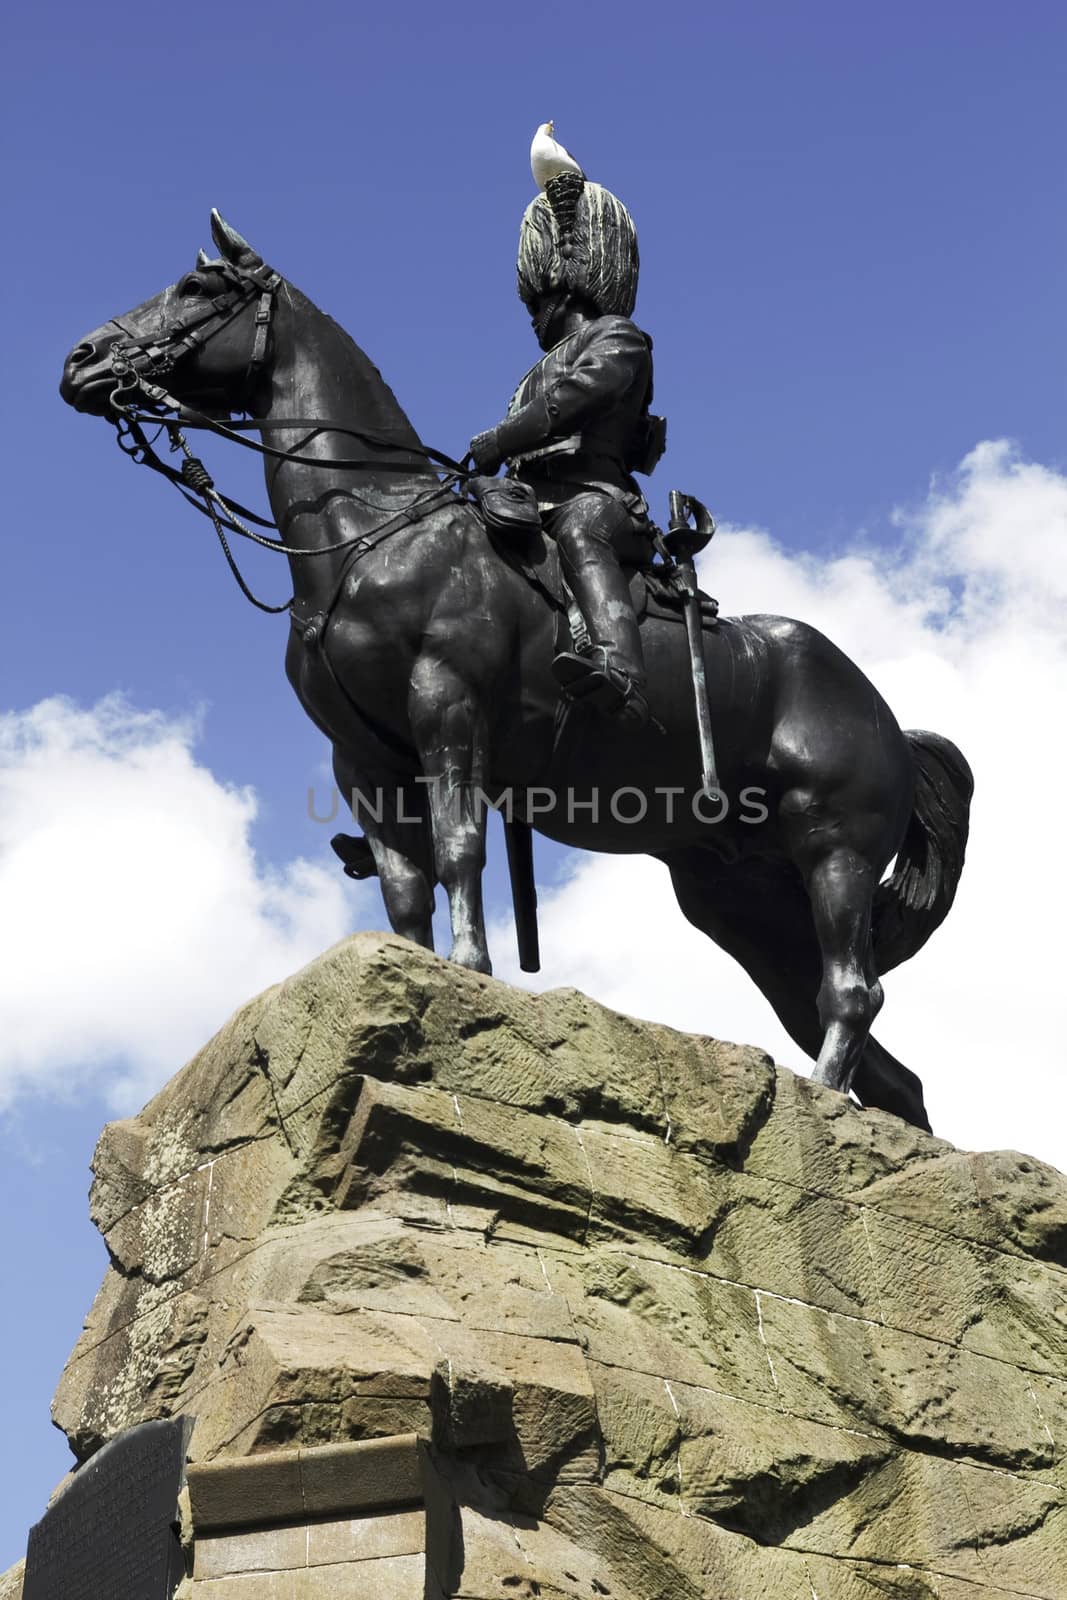 Royal Scots Greys Monument, Edinburgh by darkhorse2012